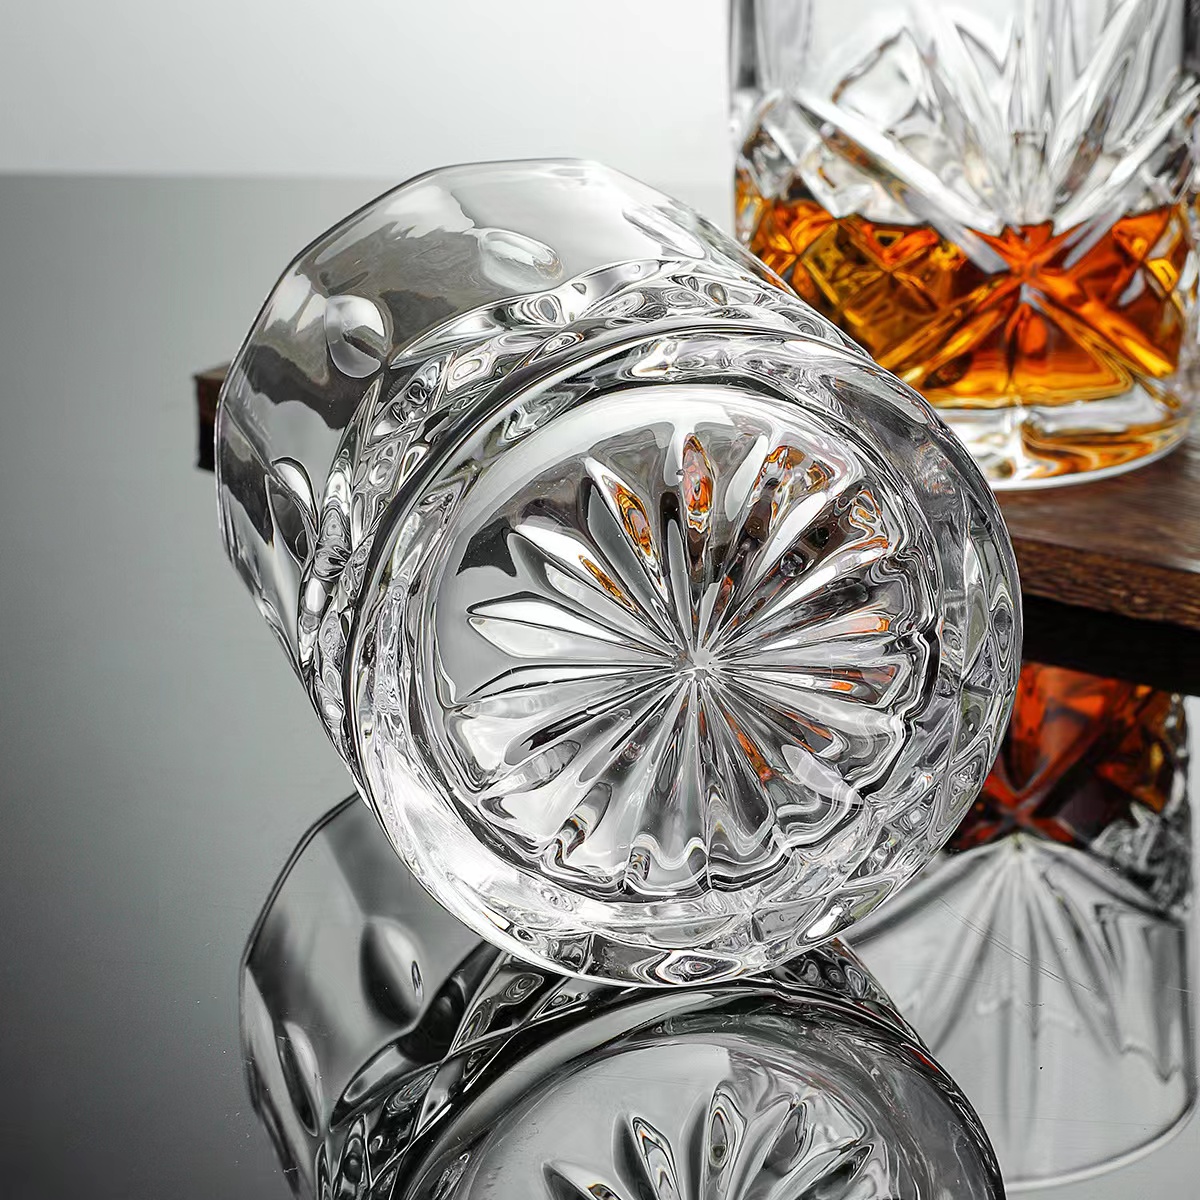 Magalasi Akale A Whisky A Scotch, Bourbon, Liquor04 - 副本